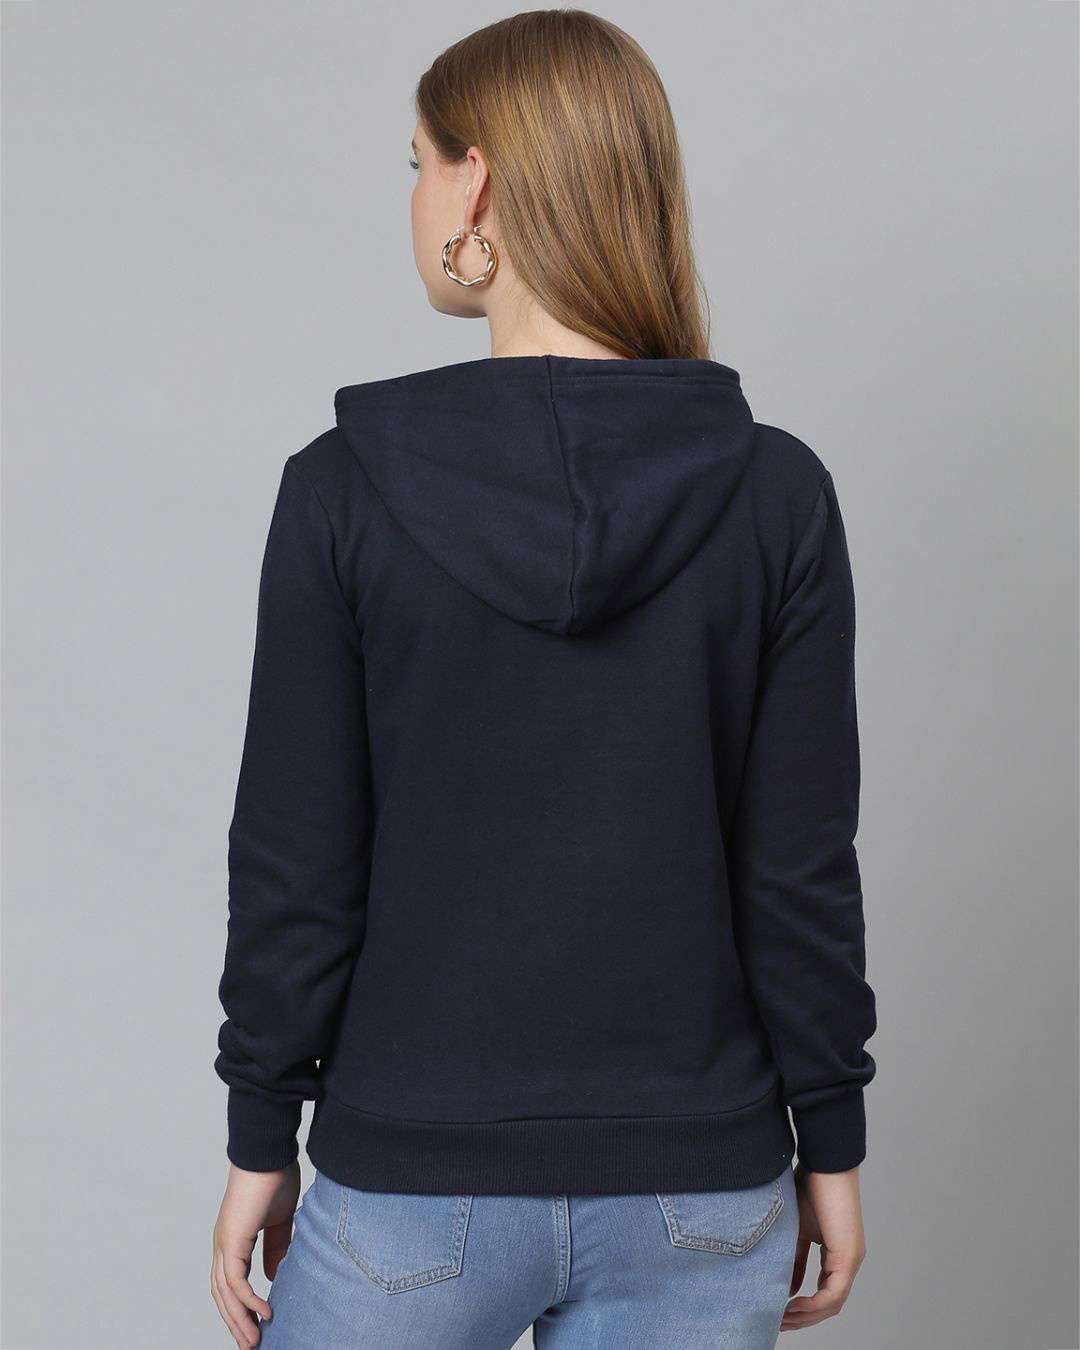 Shop Women's Blue Printed Stylish Casual Hooded Sweatshirt-Back